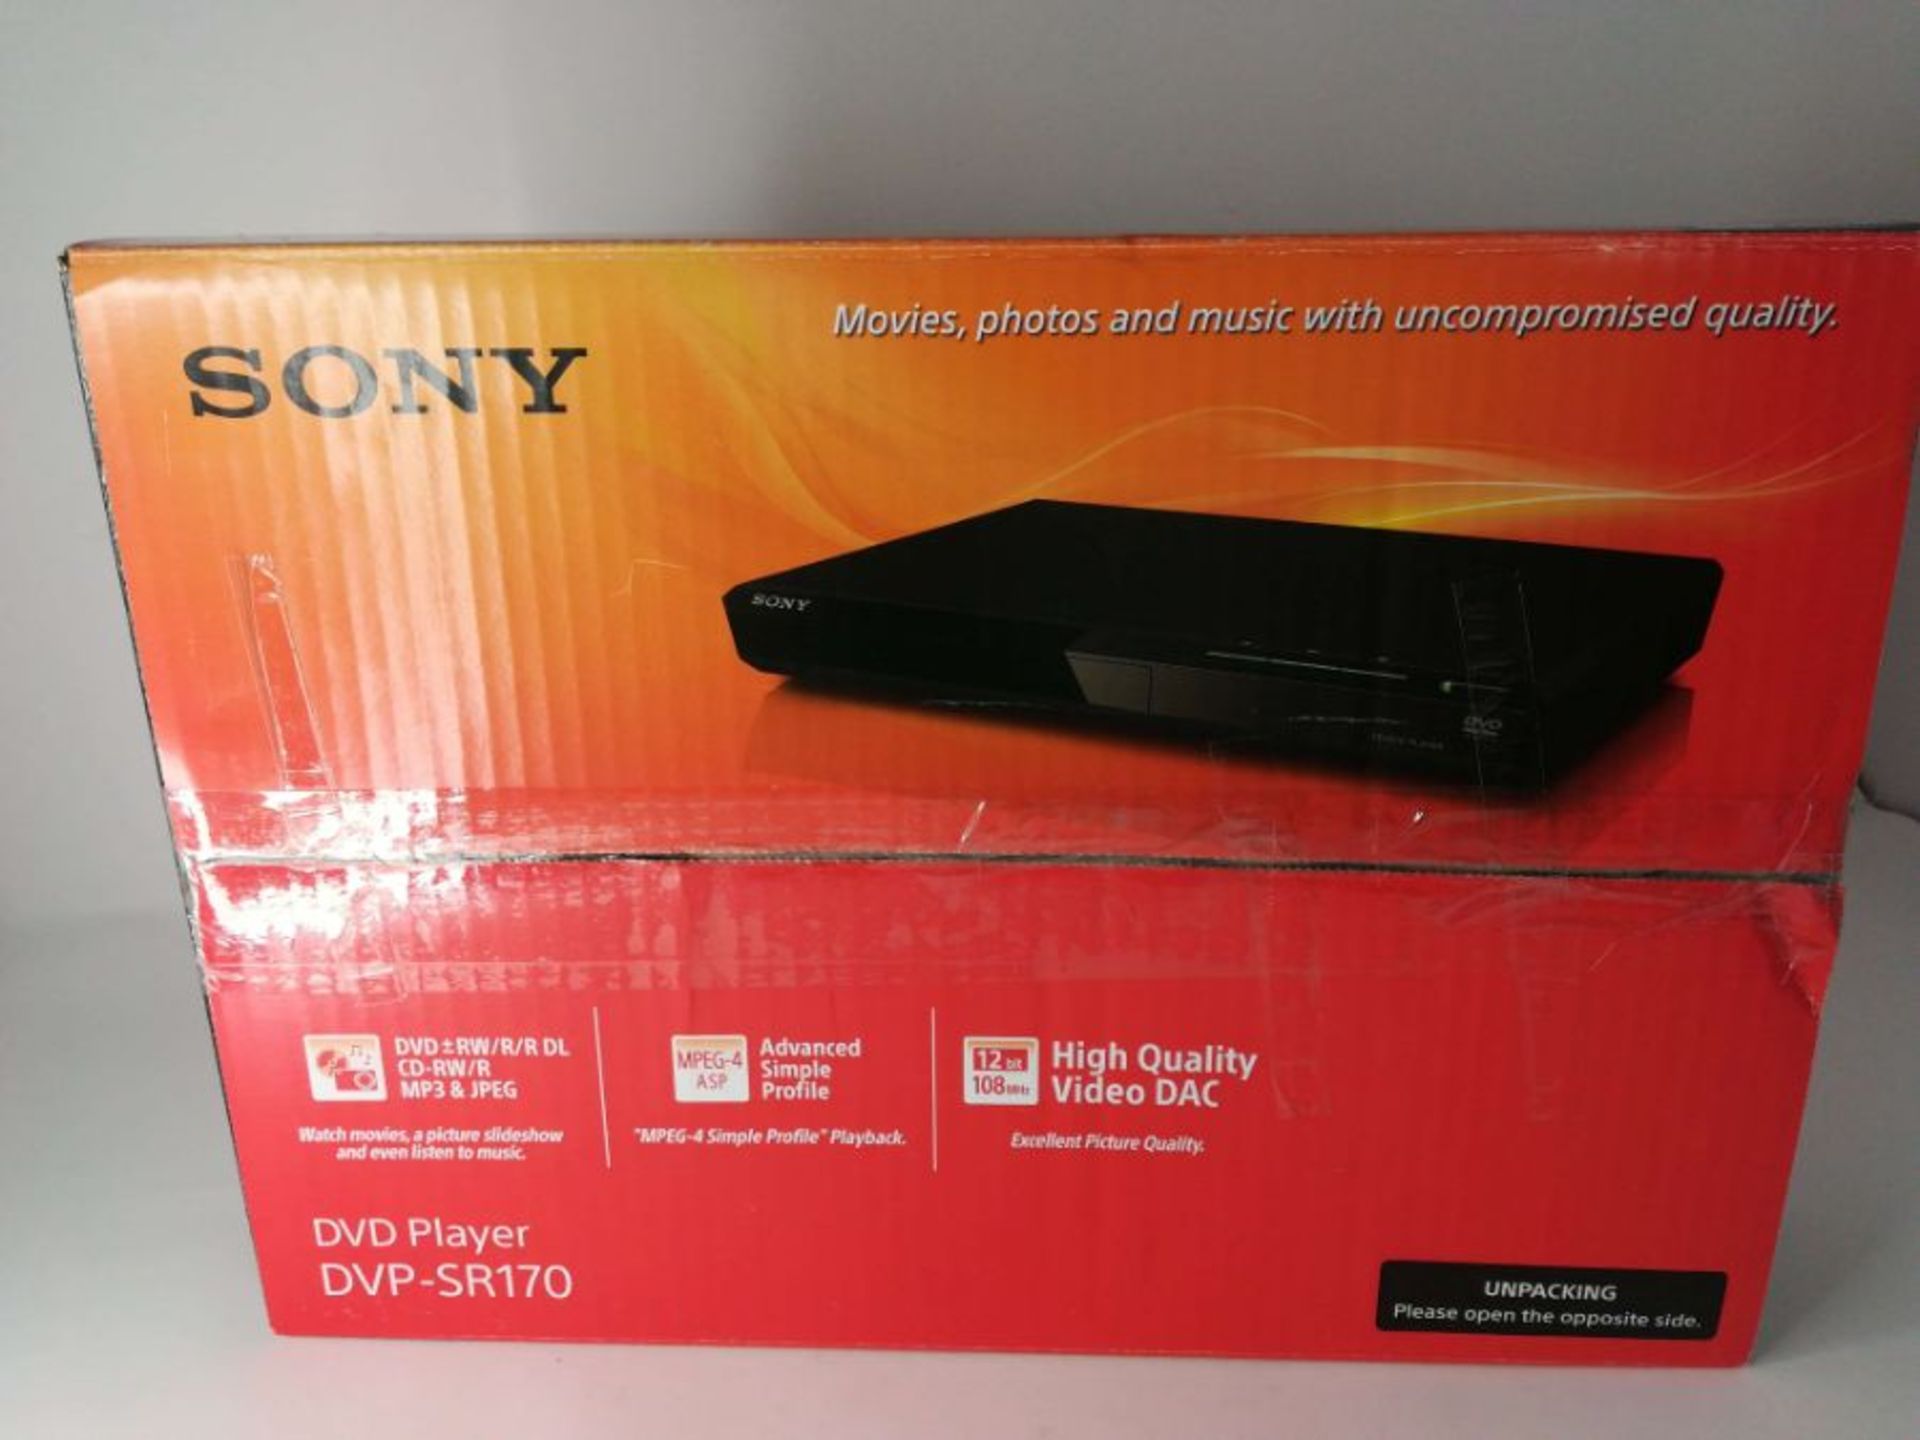 Sony DVP-SR170 DVD Player, Scart Only (No HDMI Port), Black - Image 2 of 2